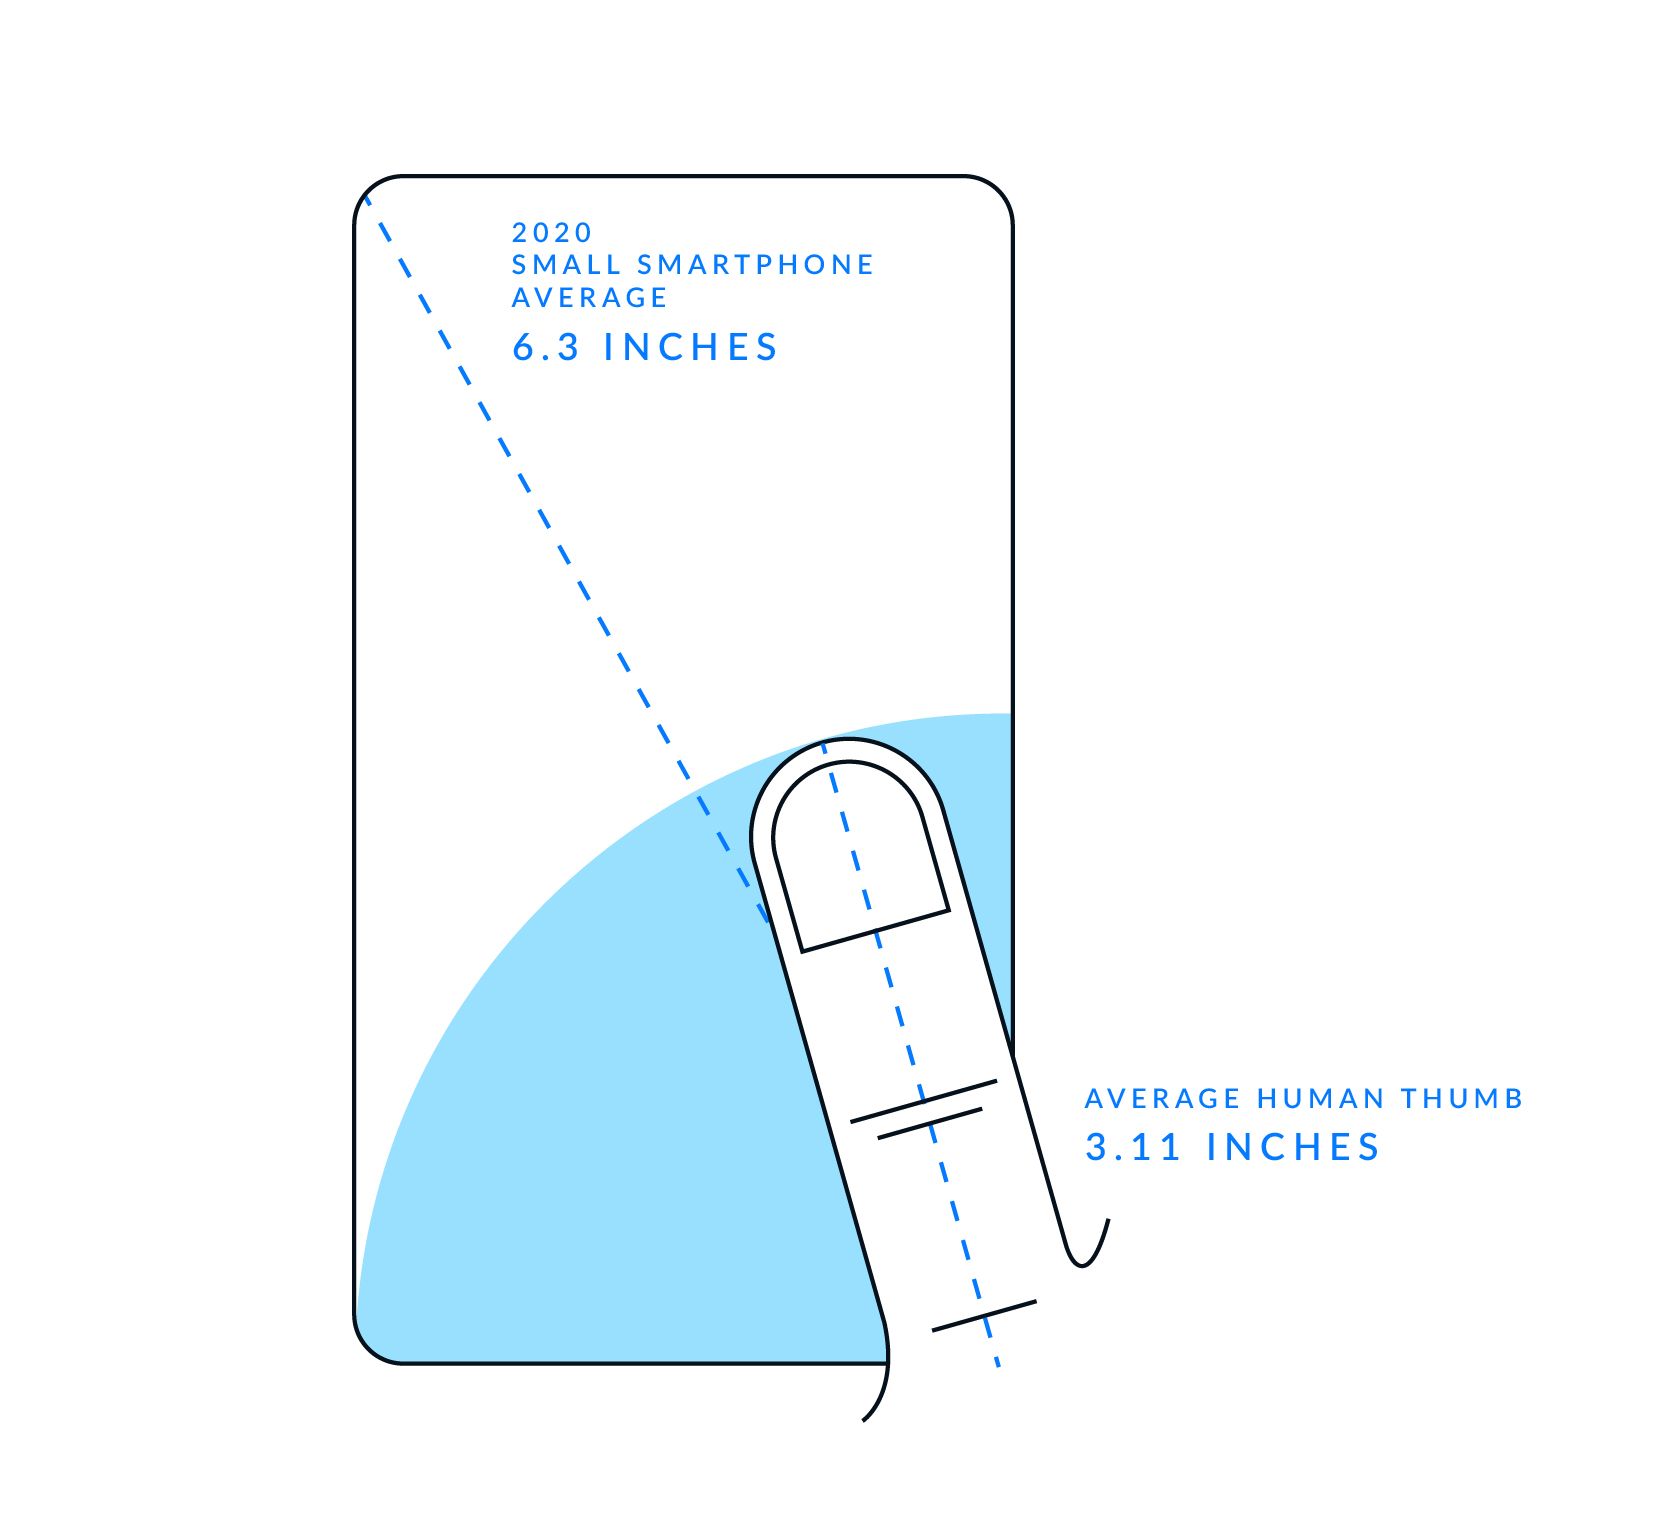 A representation of the average human thumb vs a small average smartphone